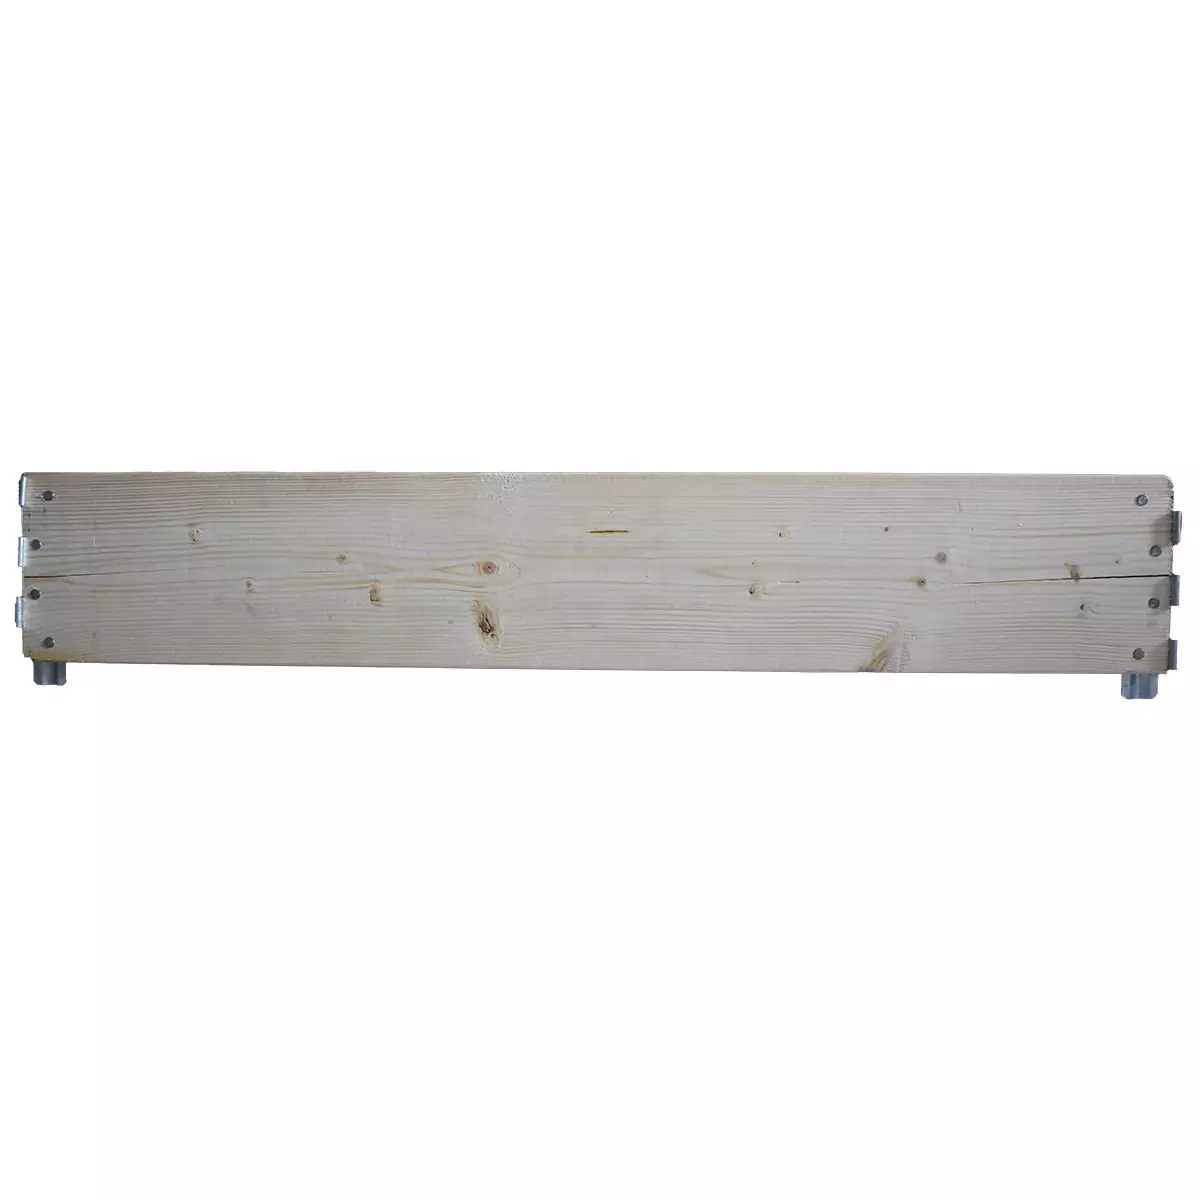 Extension board pallet length 120 cm